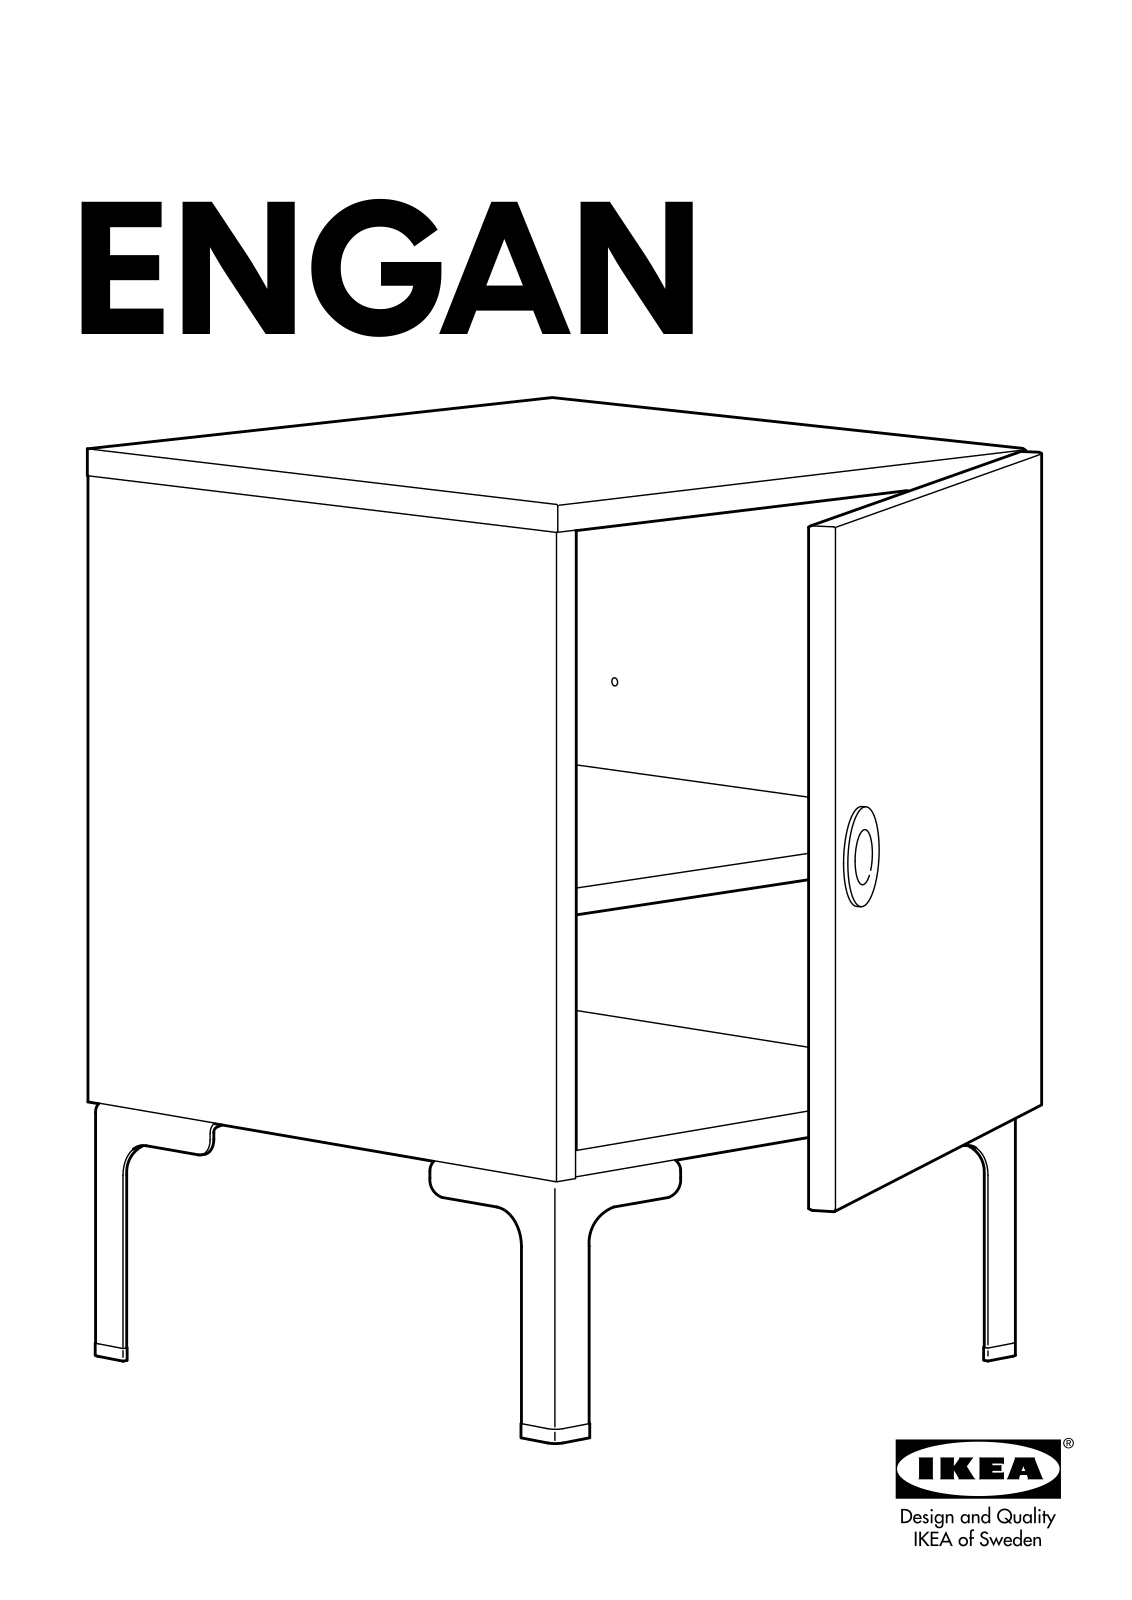 IKEA ENGAN BEDSIDE TABLE User Manual